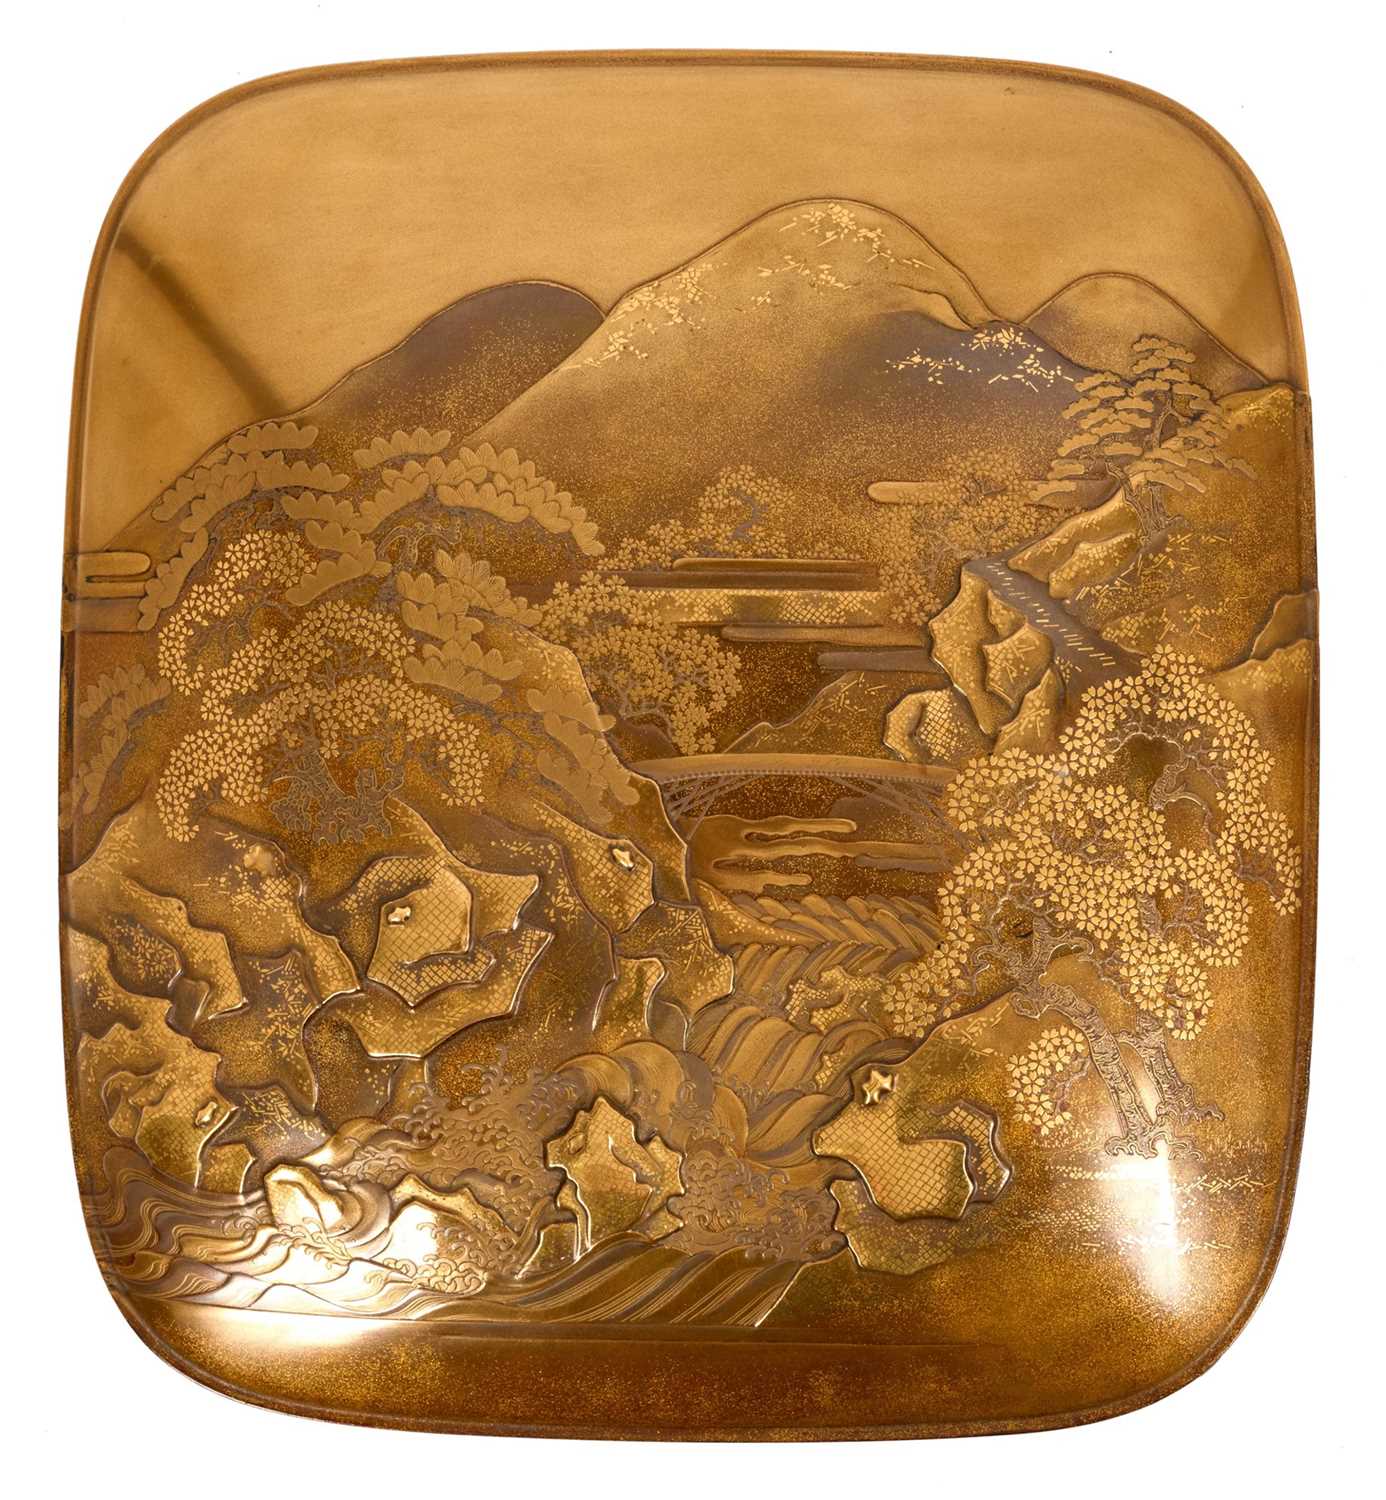 Superb matching set of a gold lacquer ryoshibako and suzuribako, Meiji Period - Image 10 of 18